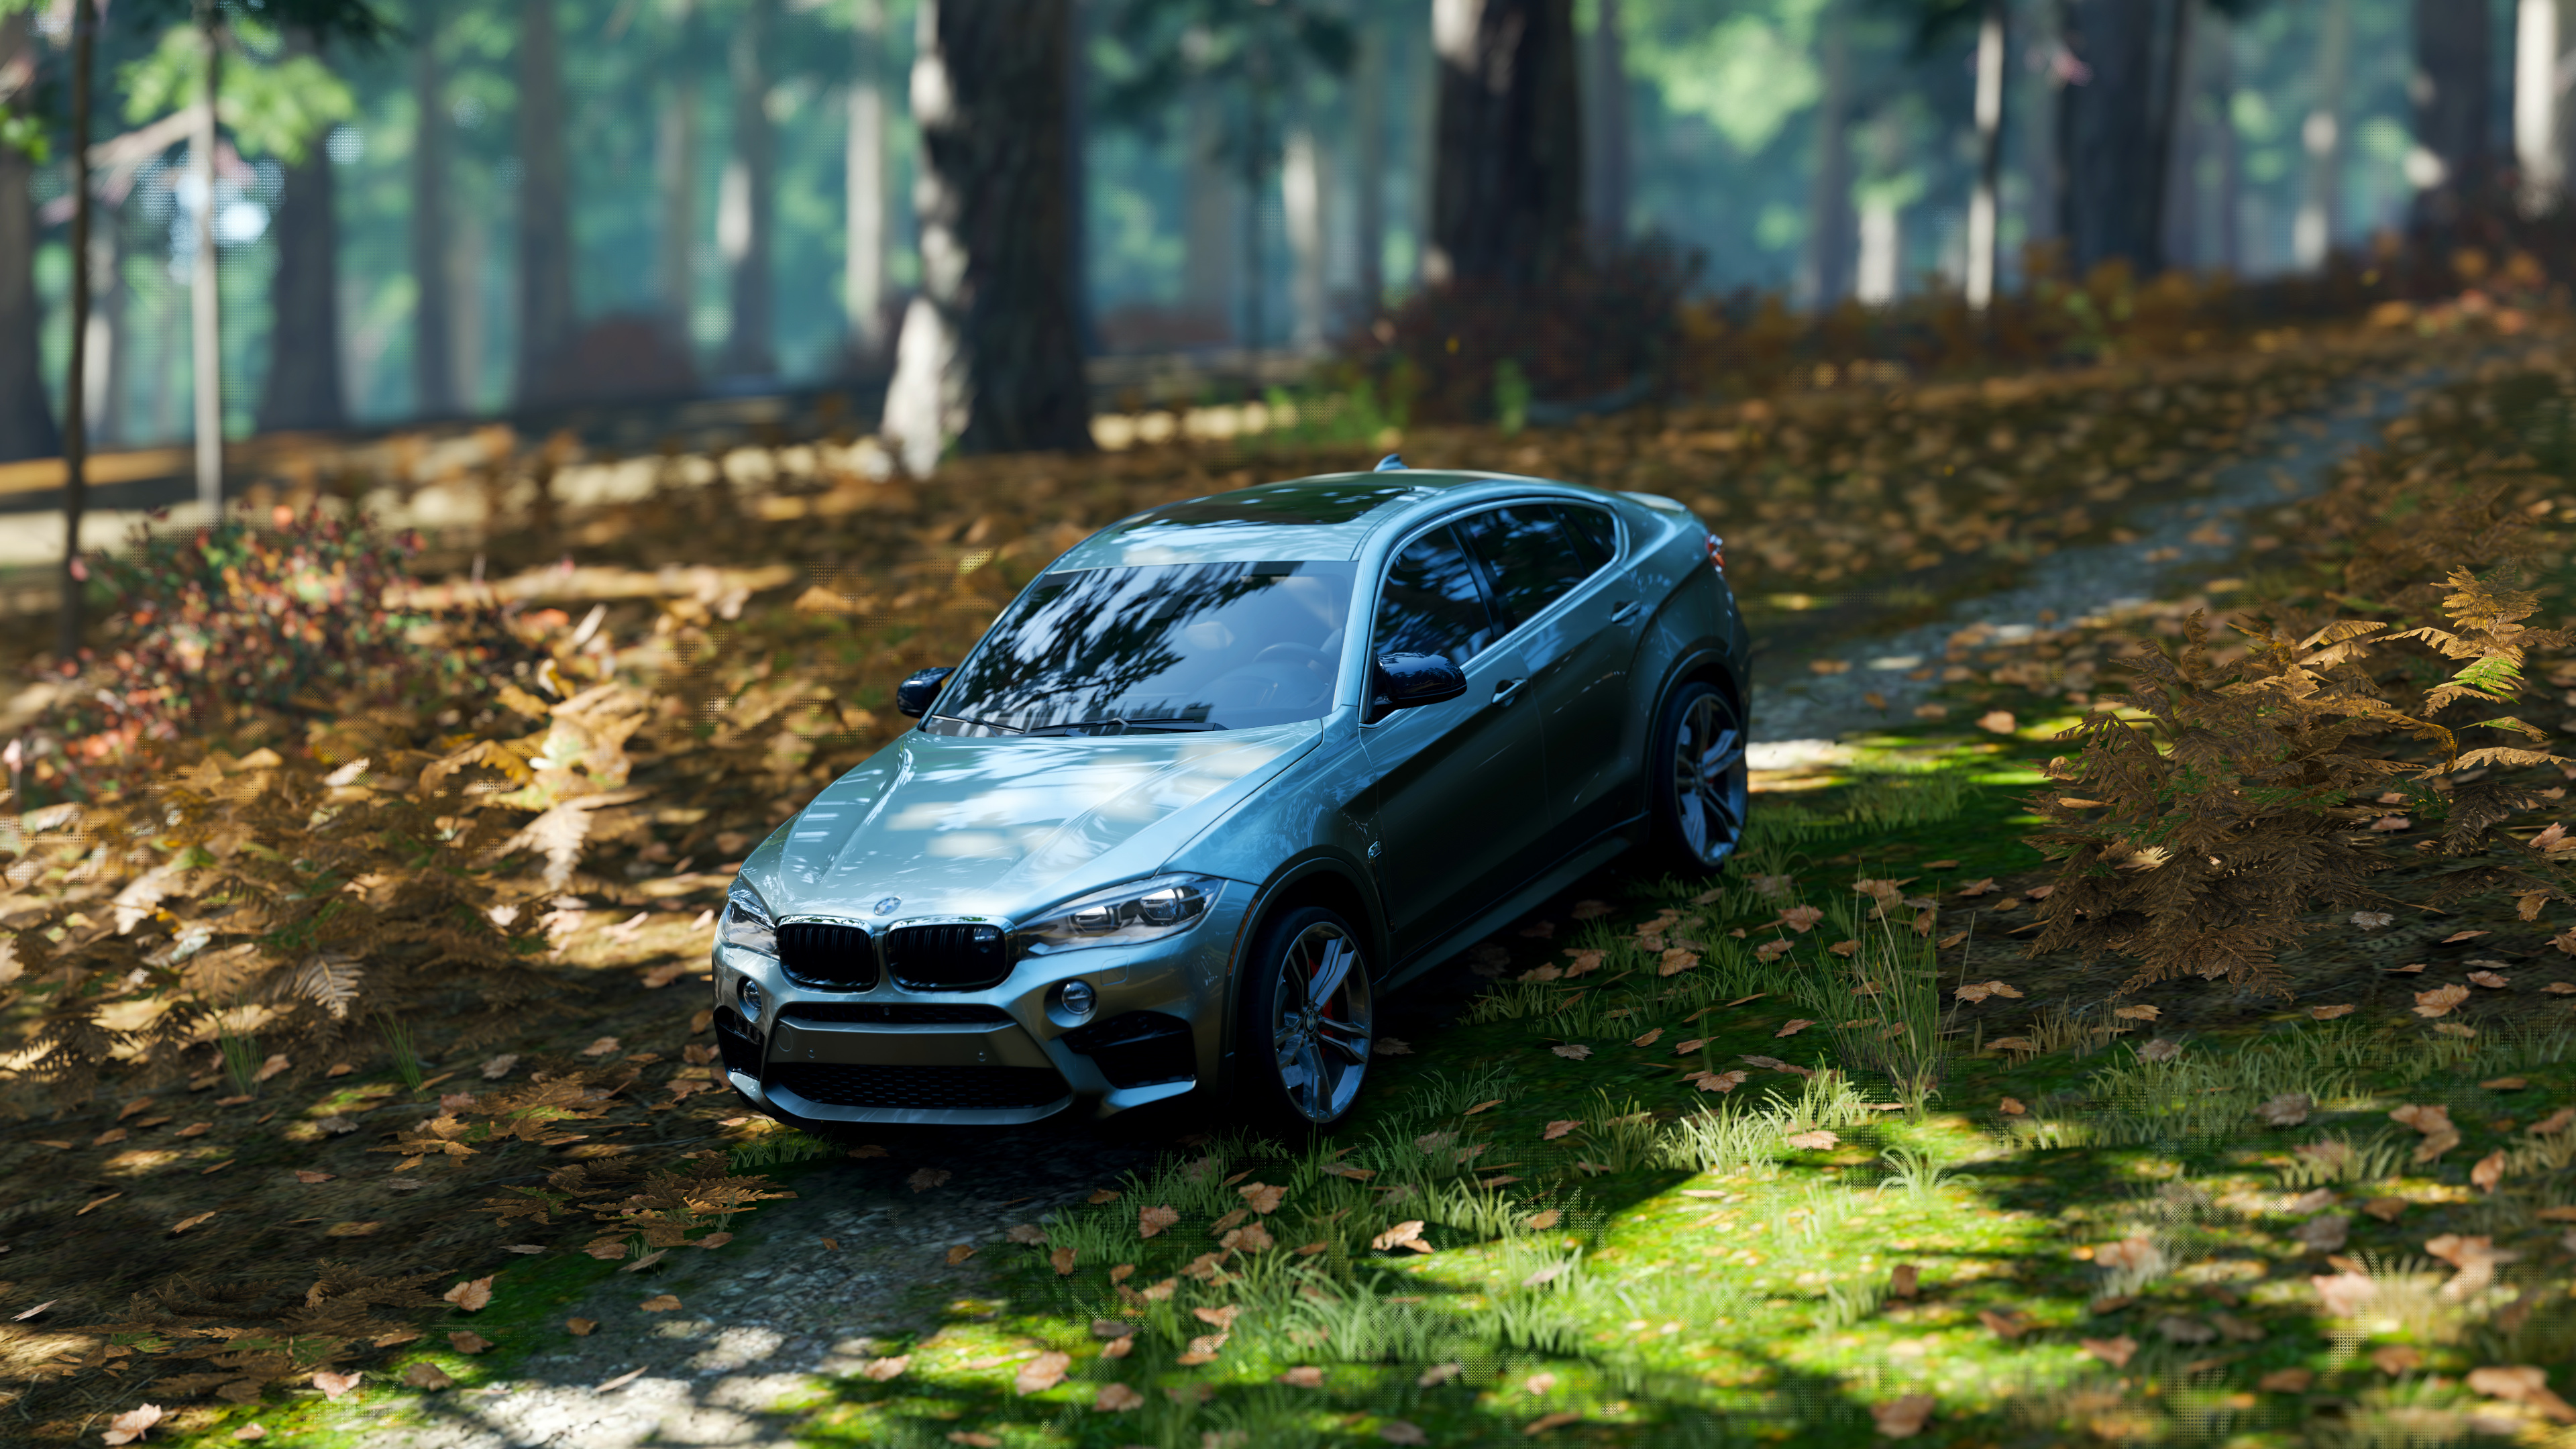 BMW X6, Forza Horizon 4, Video game art, Forest backdrop, 3840x2160 4K Desktop